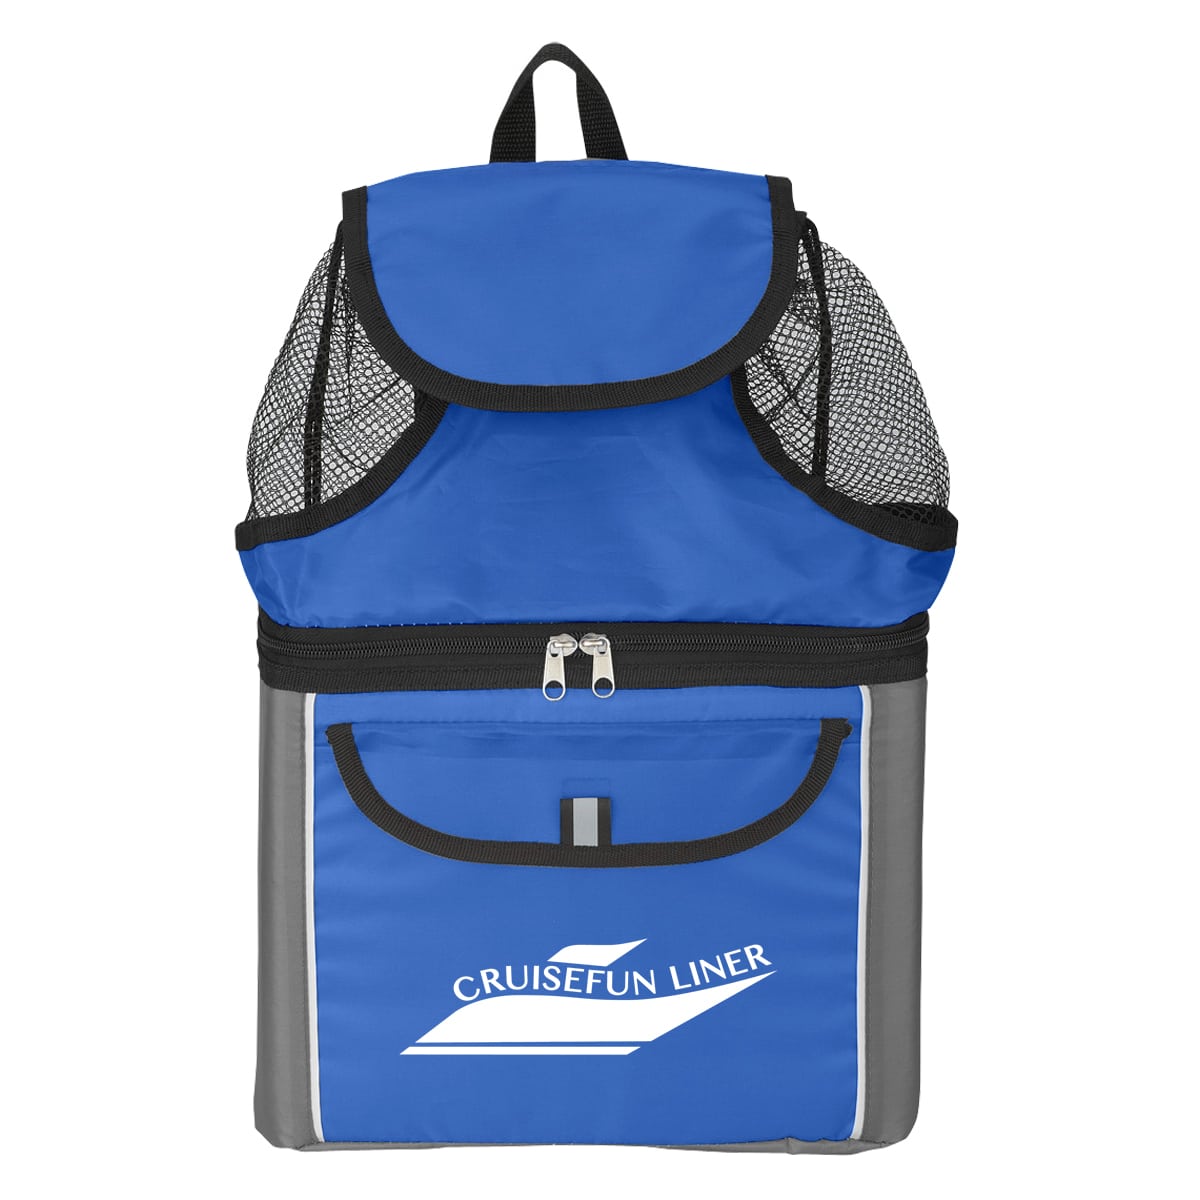 All-in-one Cooler Beach Backpack - Custom Printed